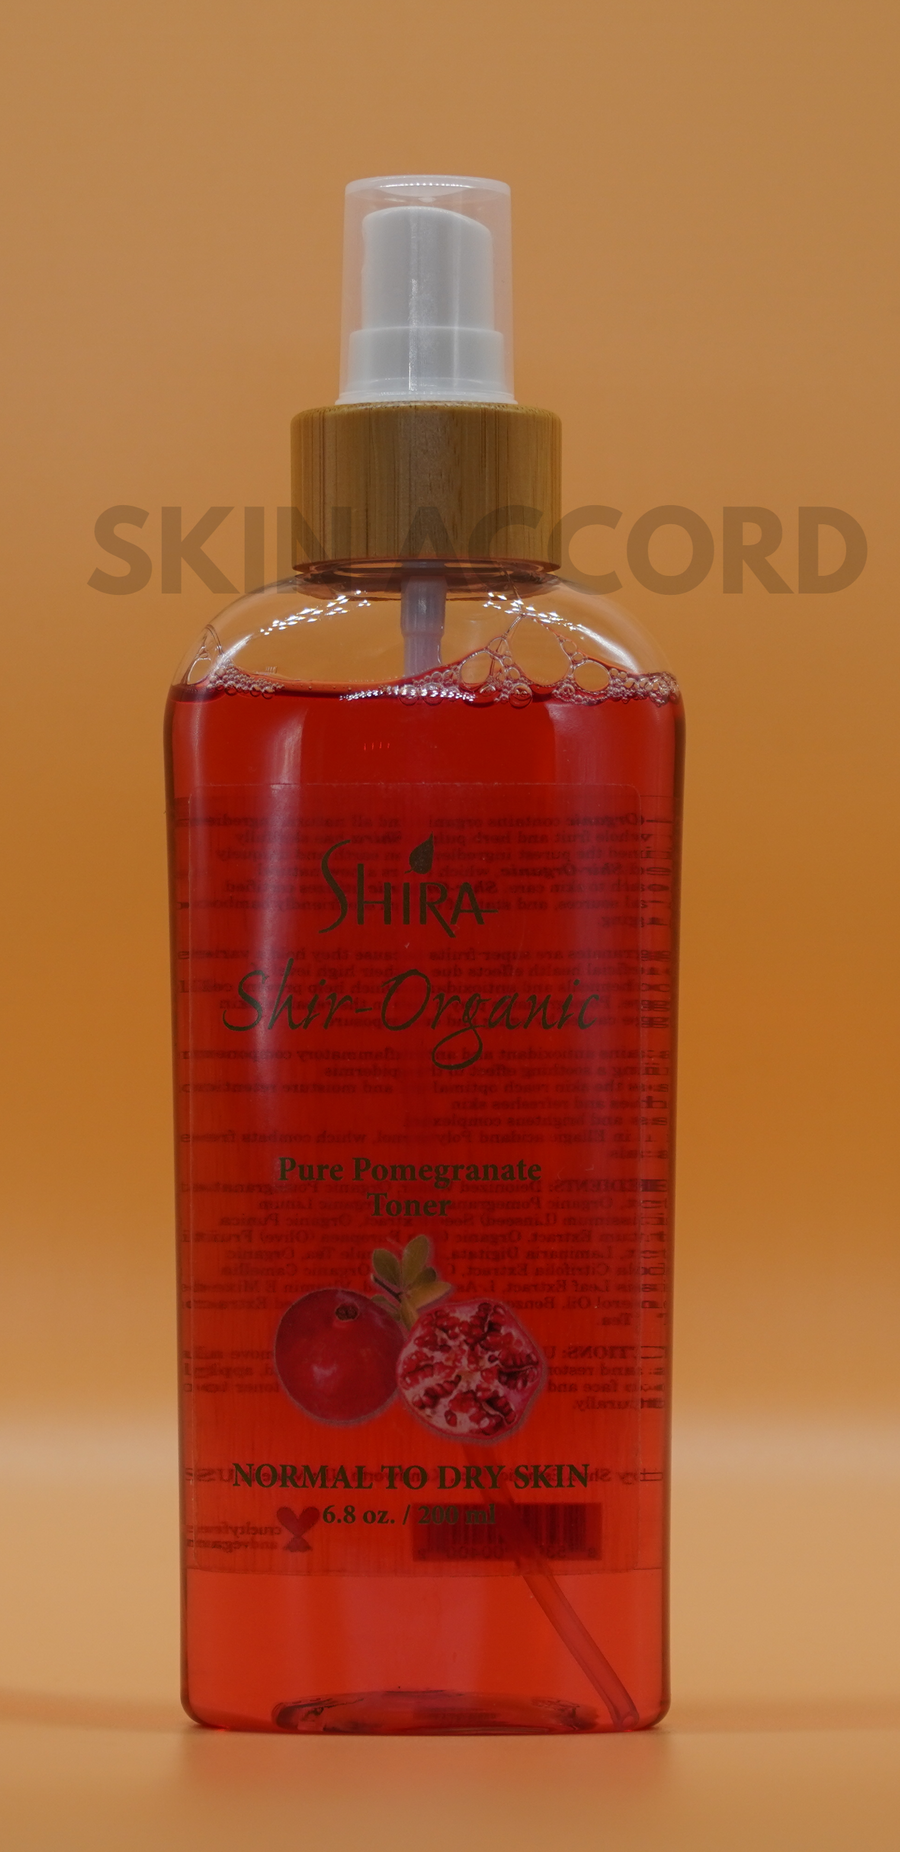 Shir-Organic Pure Pomegranate Toner (Normal to Dry)